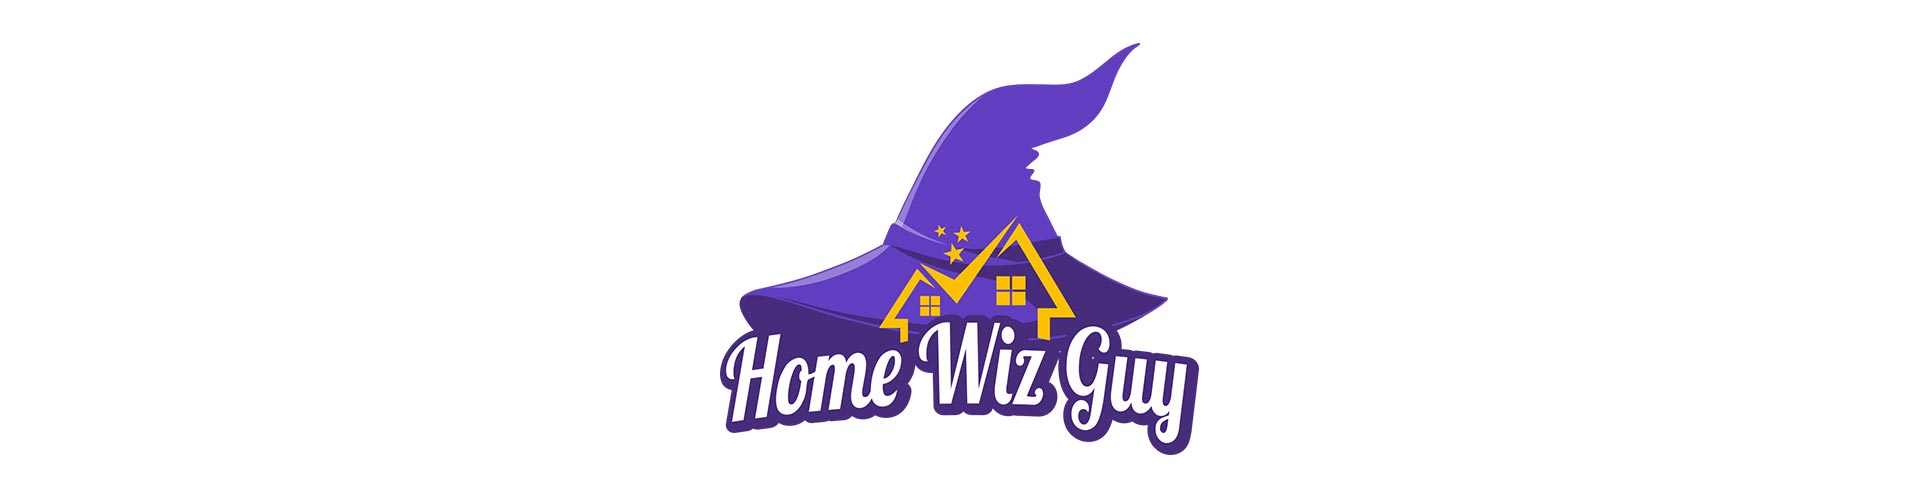 Home Wiz Guy Banner